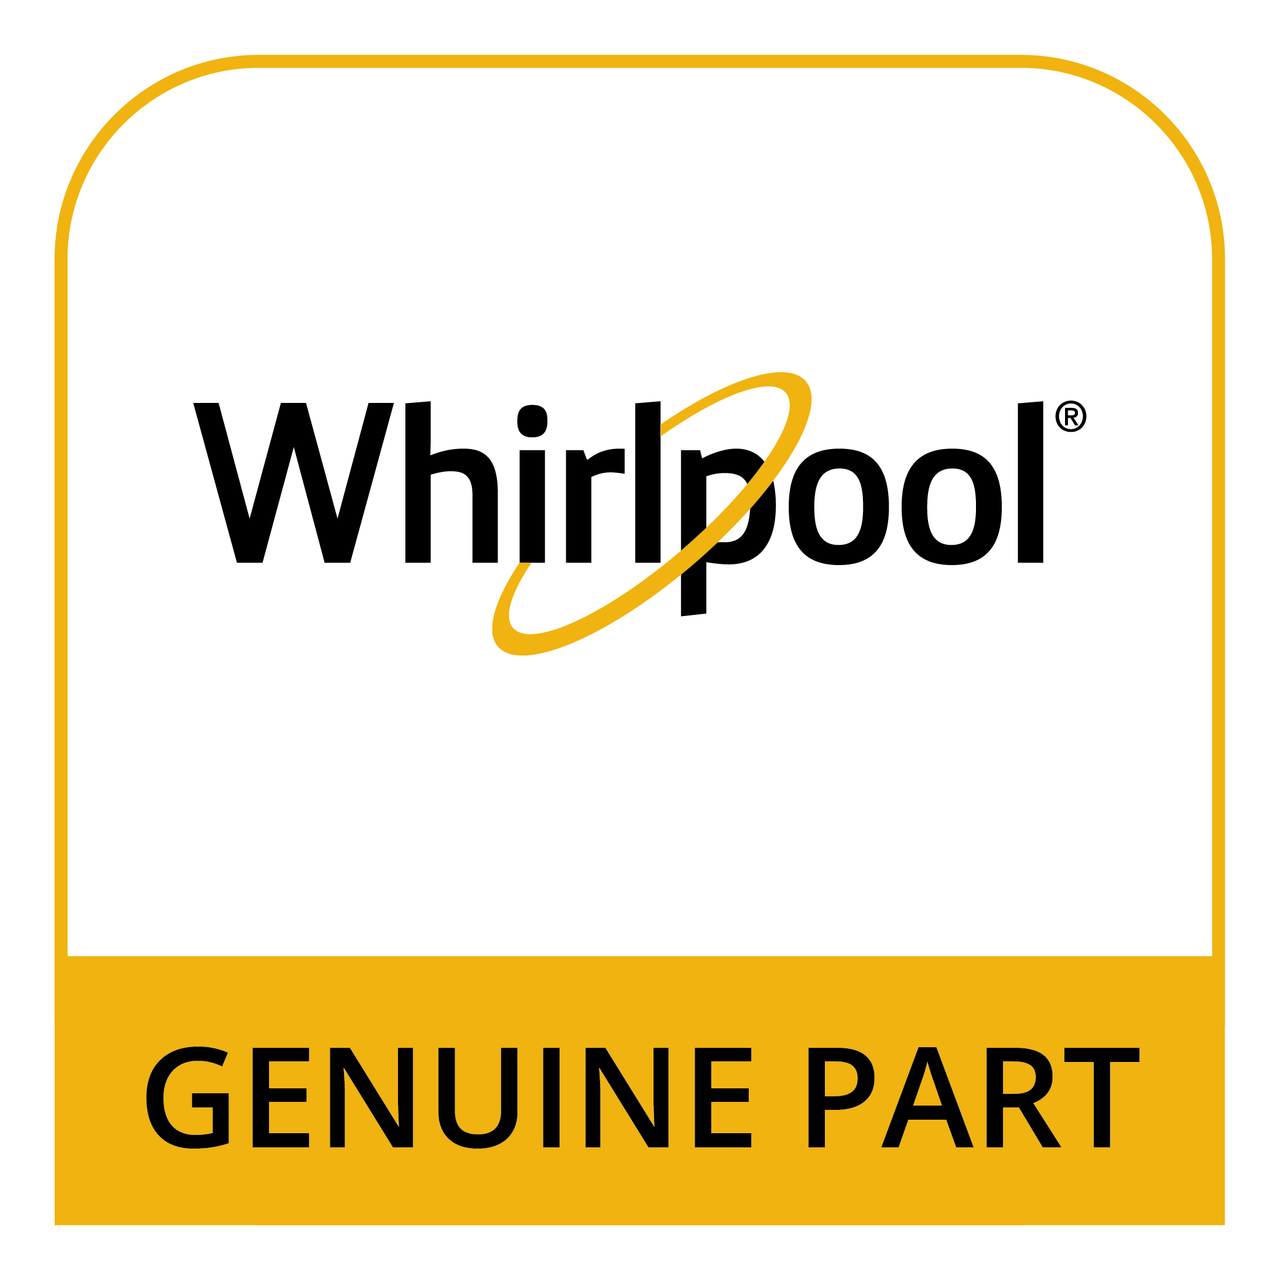 Whirlpool AR141BA - MODULE       *NON-WISE* - Genuine Part